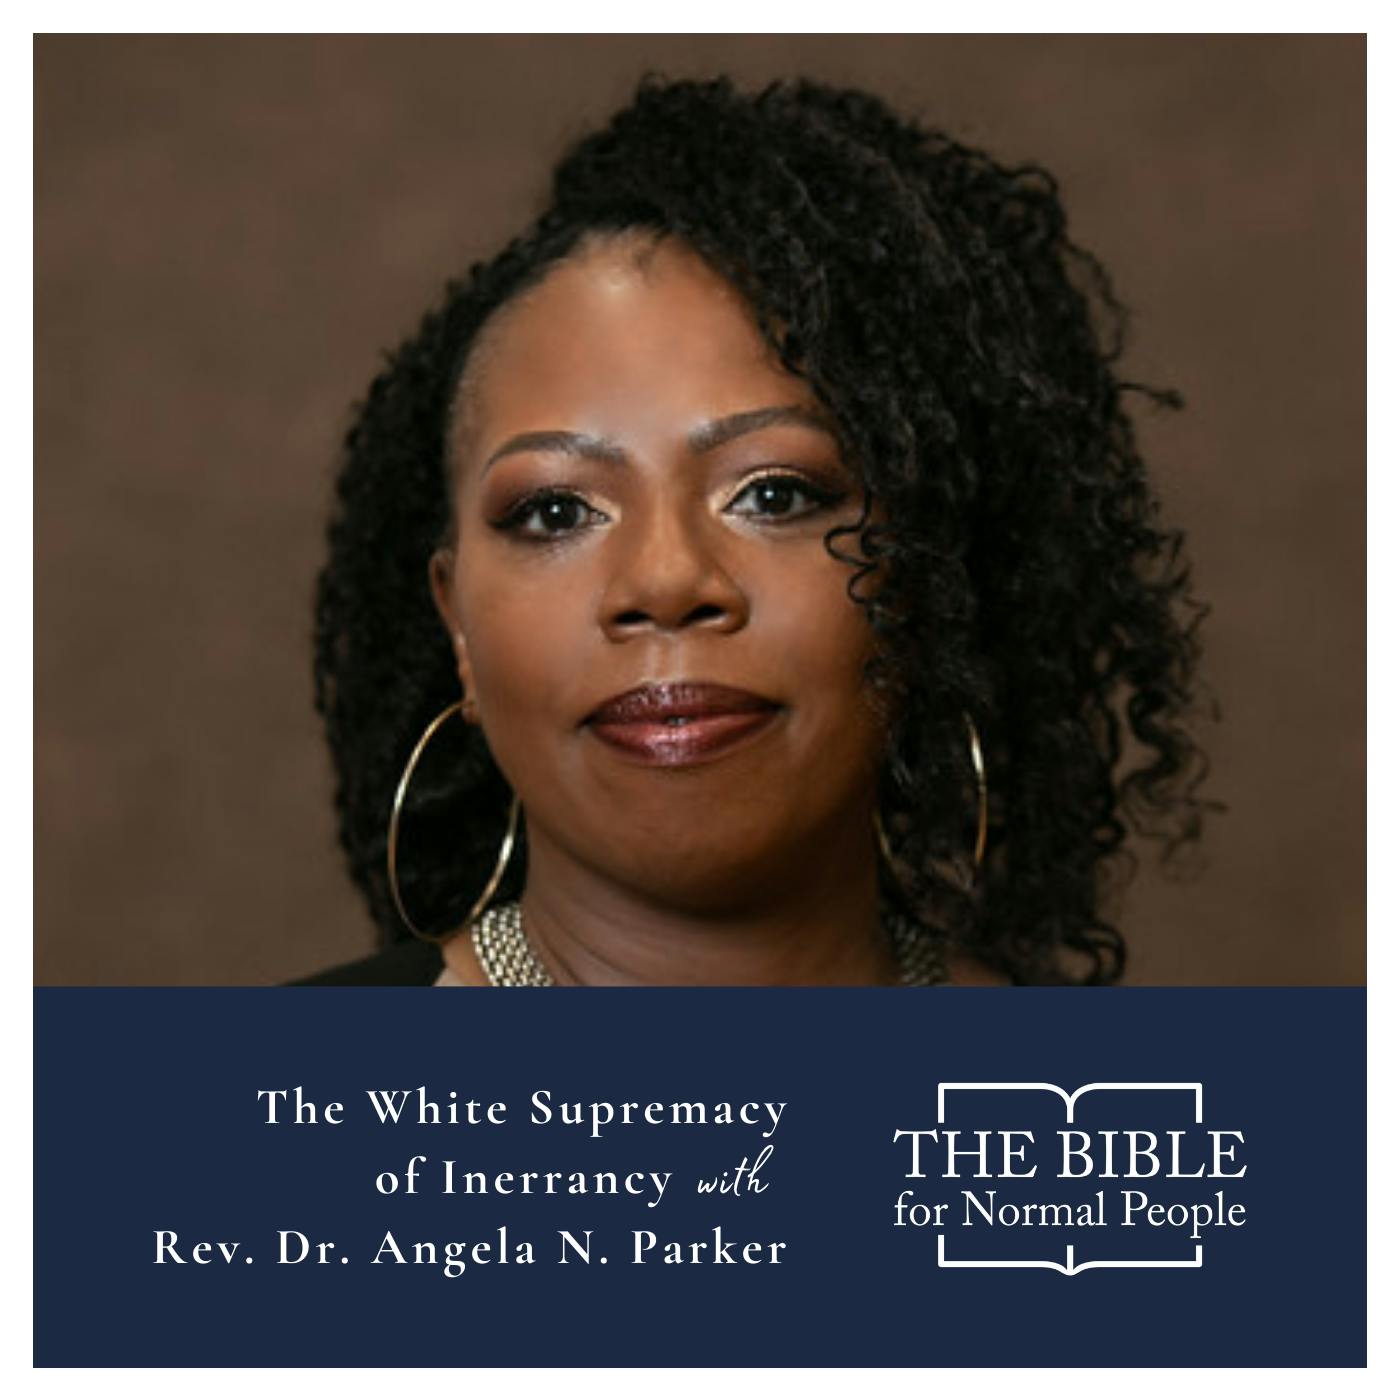 Episode 216: Rev. Dr. Angela N. Parker - The White Supremacy of Inerrancy